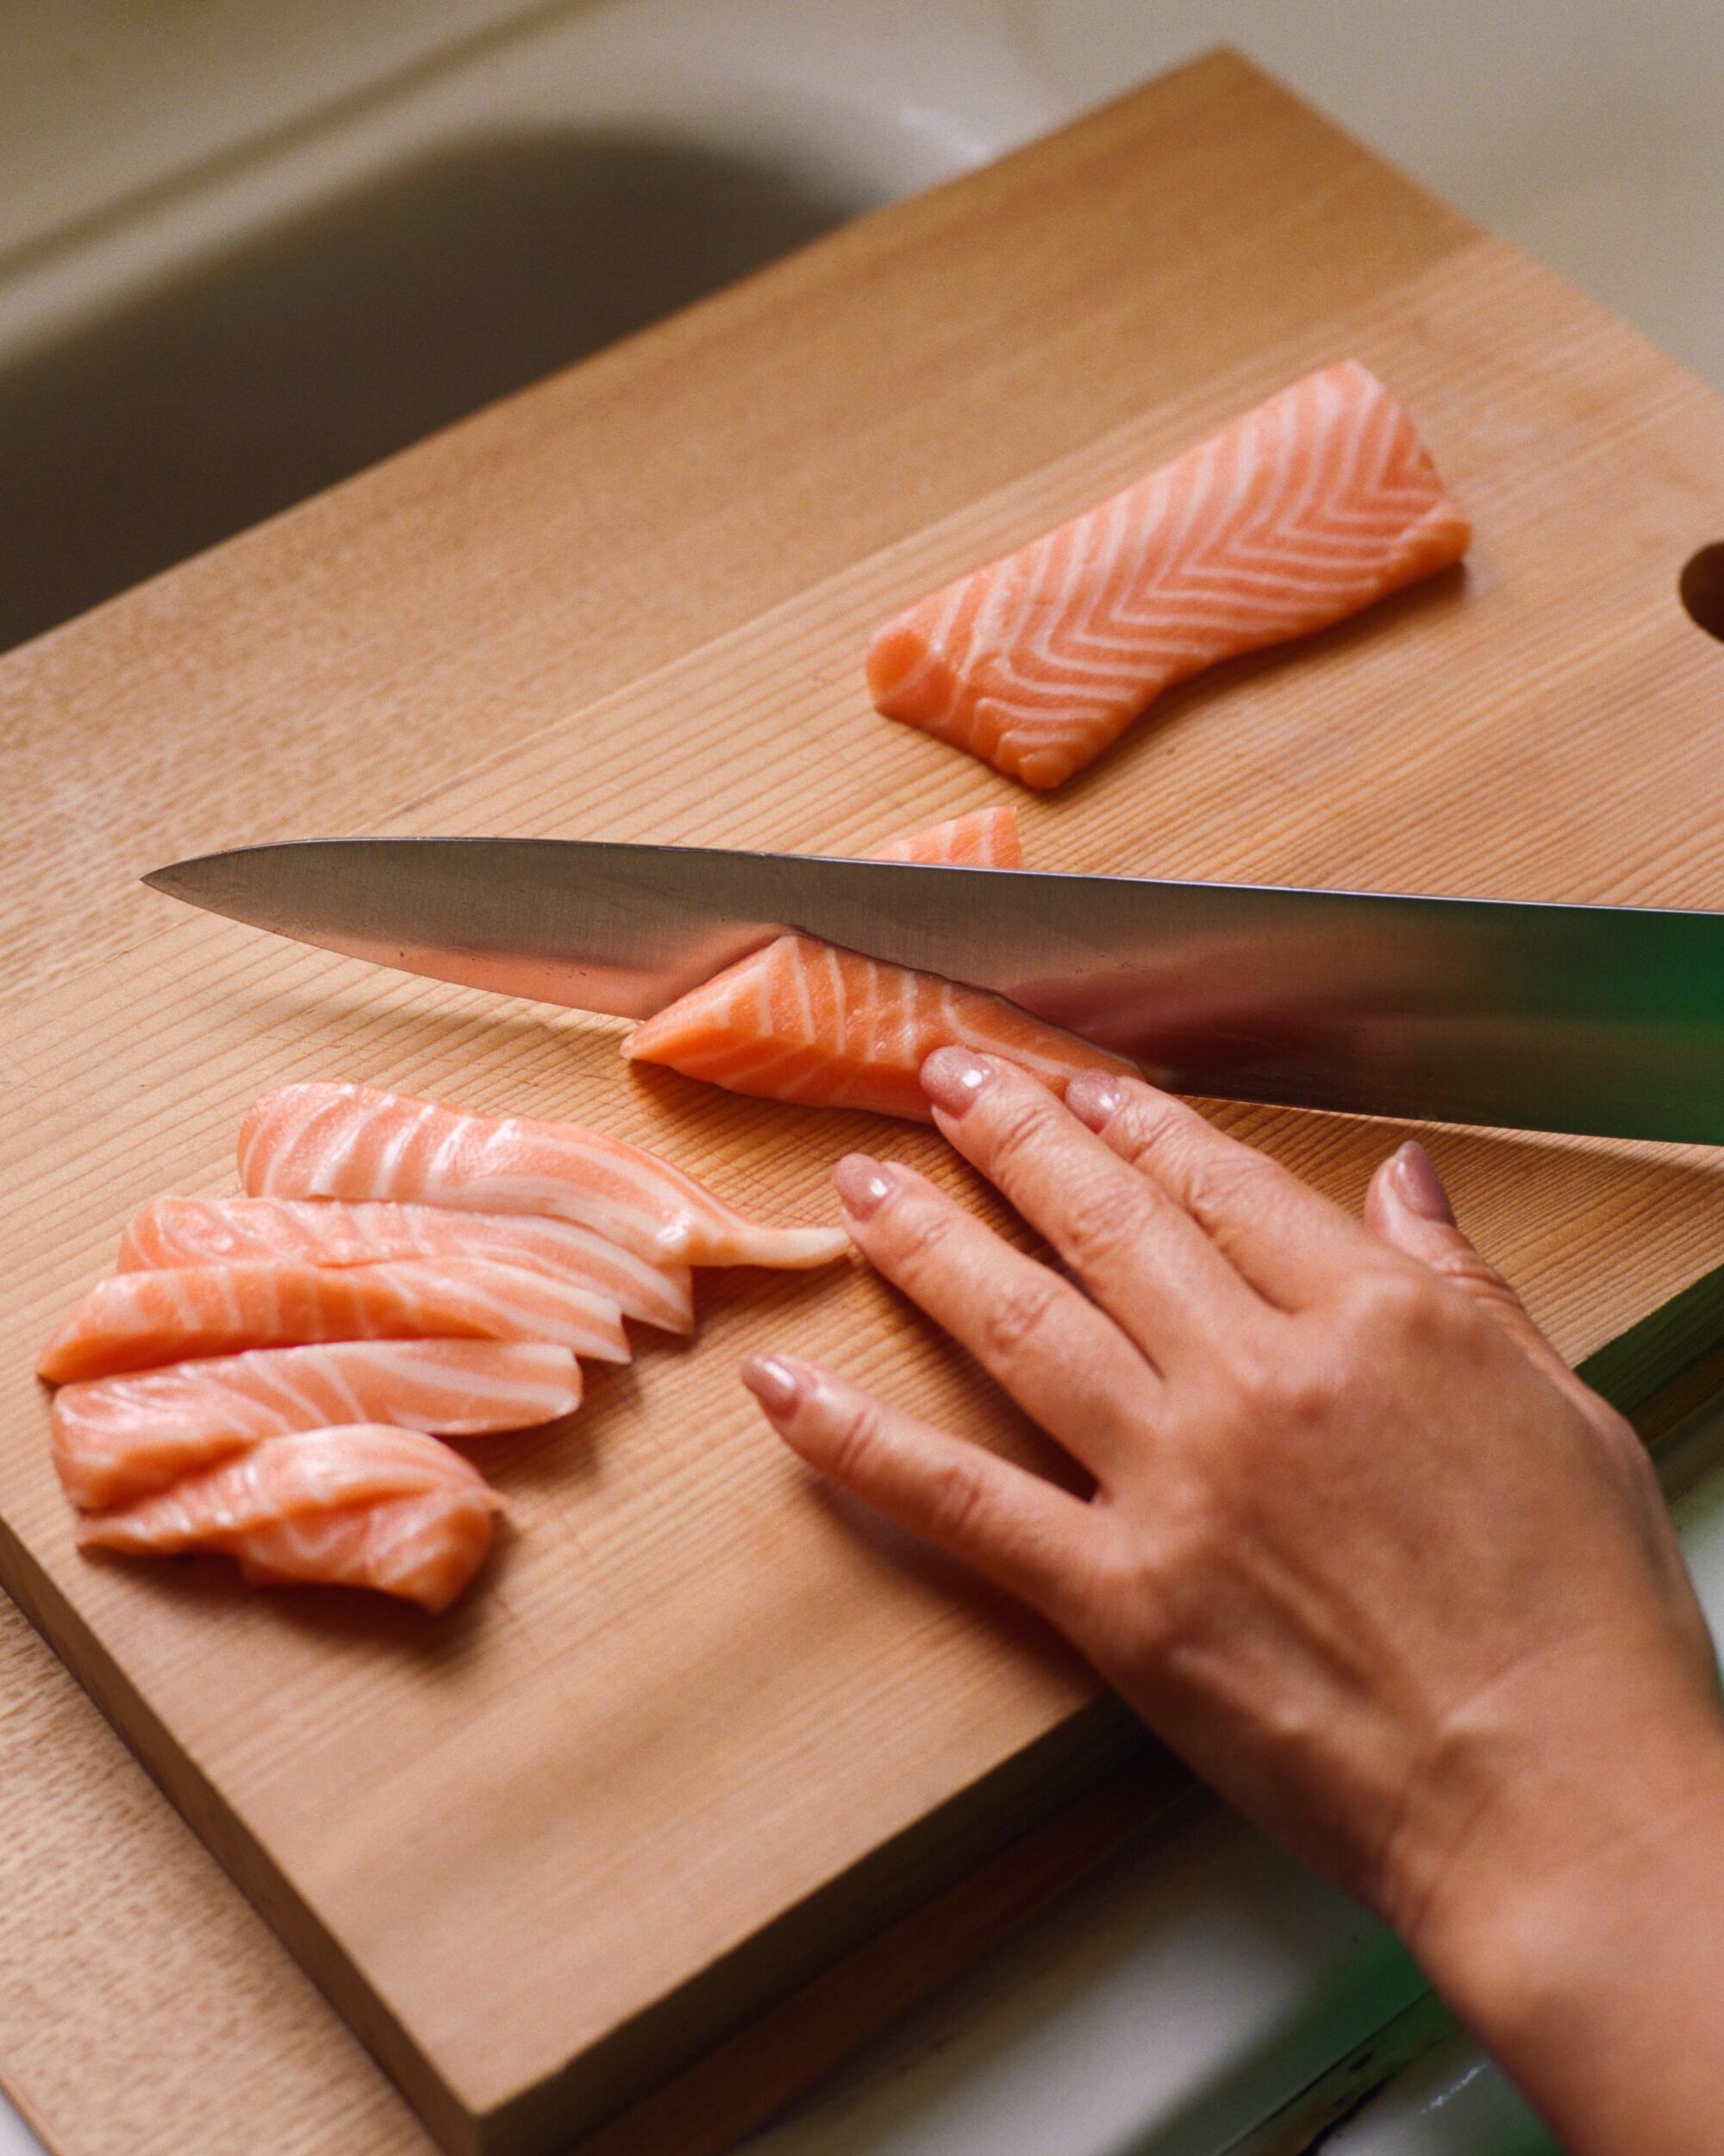 A knife slicing fish